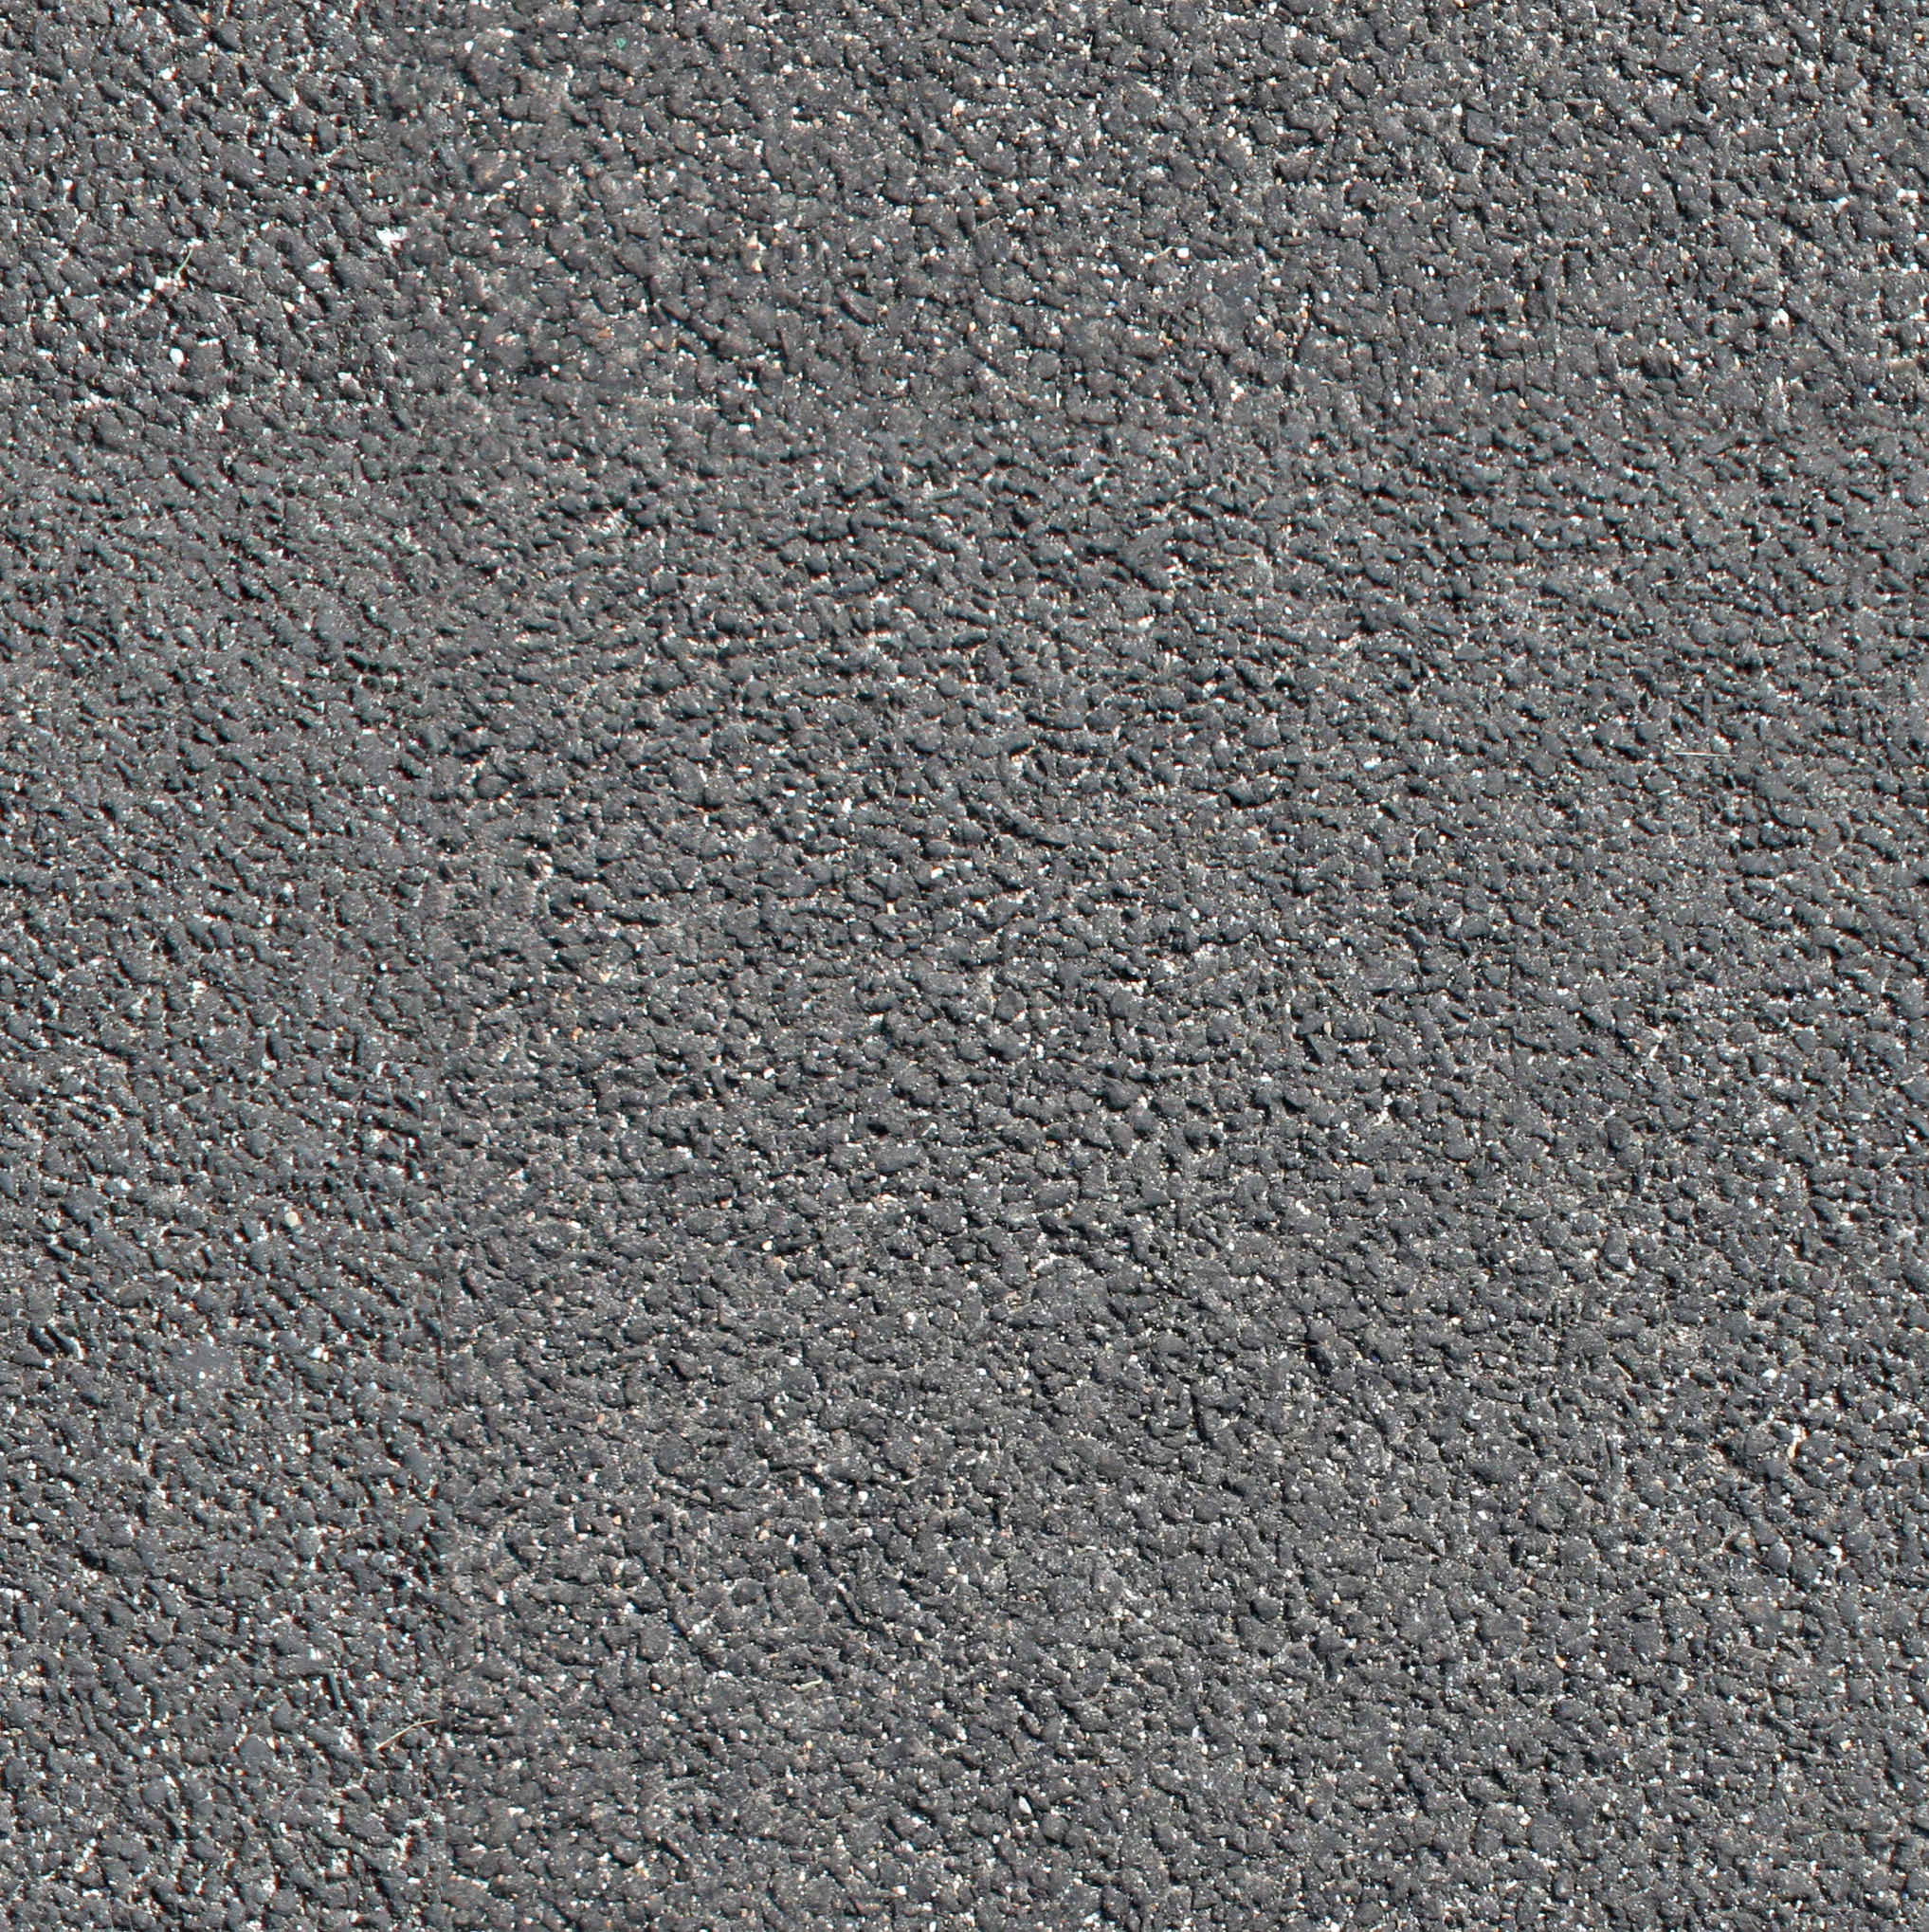 Asphalt texture background, free picture download